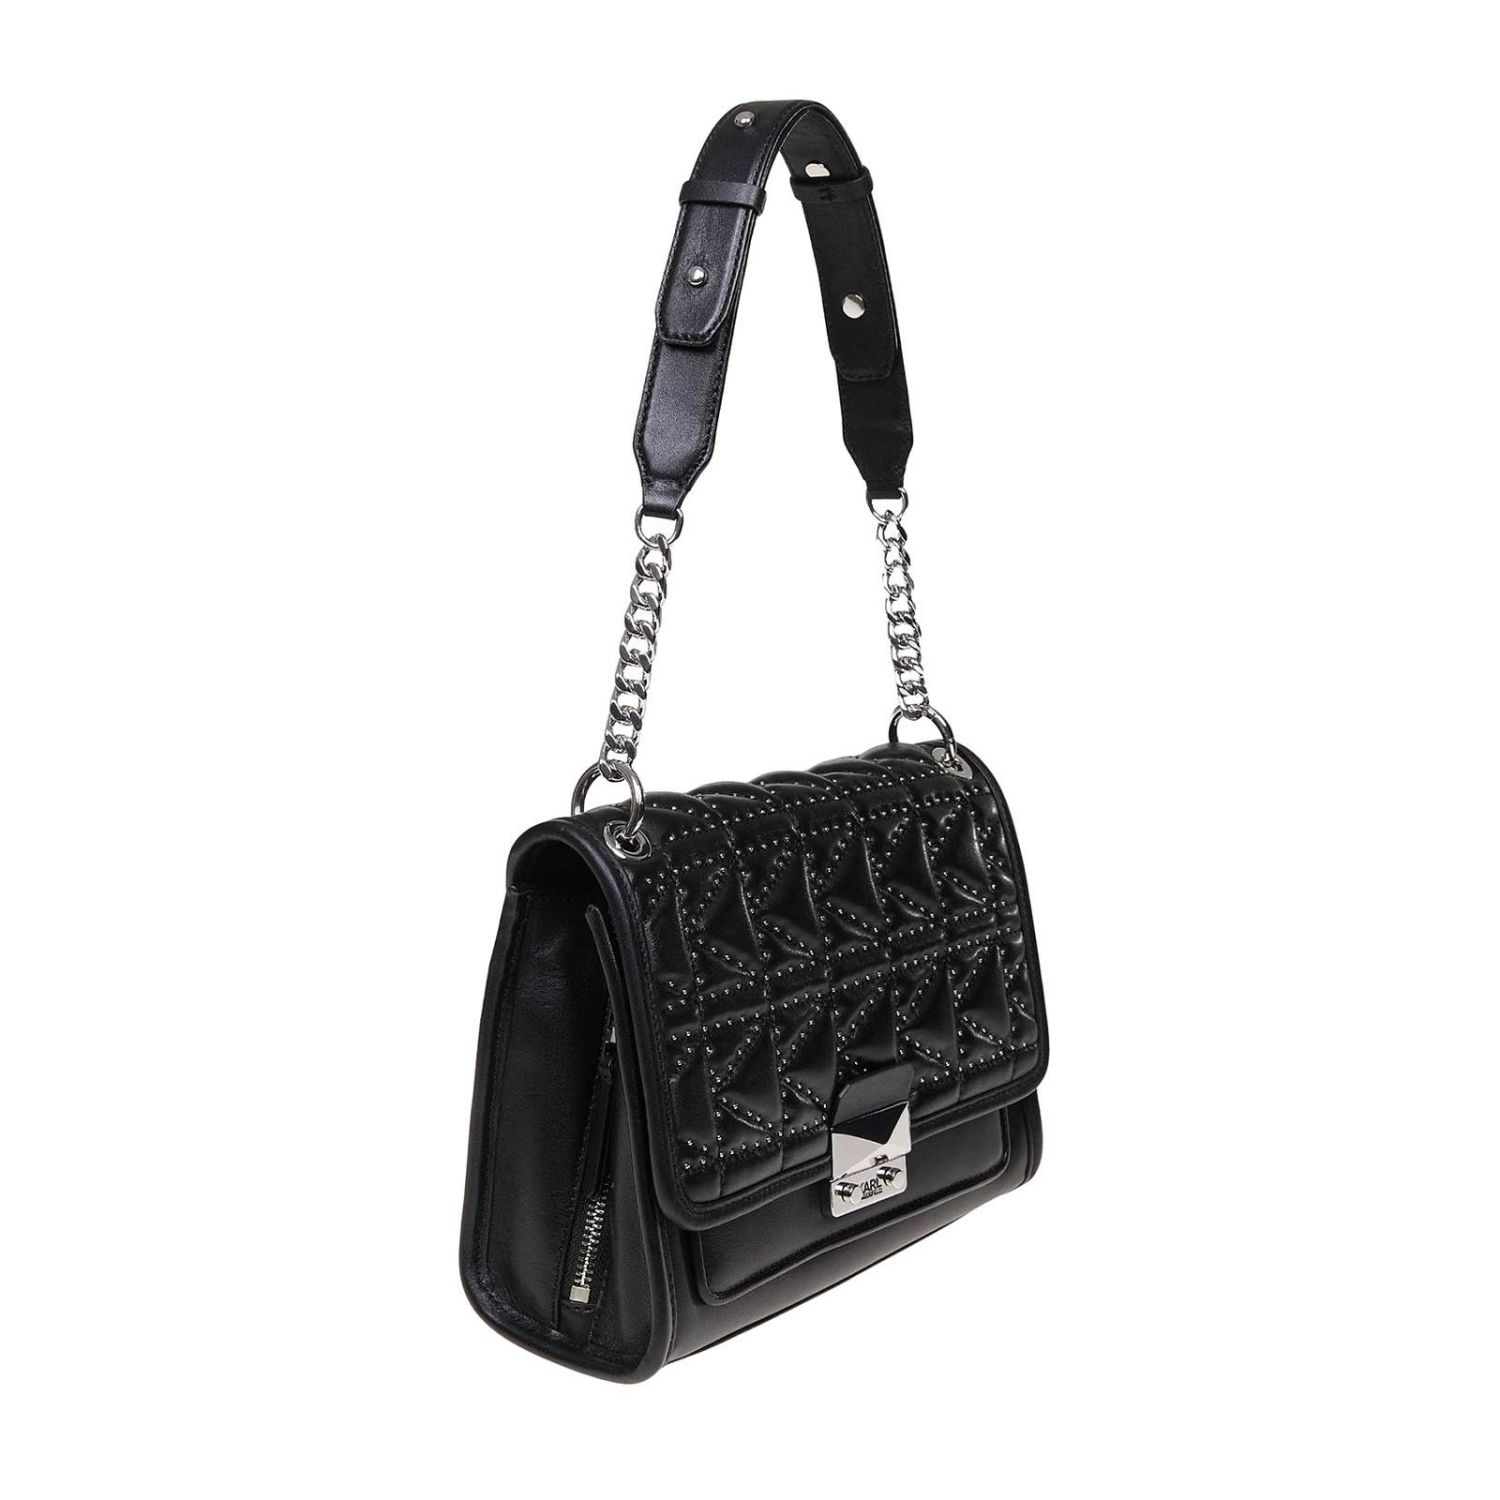 Karl Lagerfeld Outlet: Tote bags women - Black | Tote Bags Karl ...